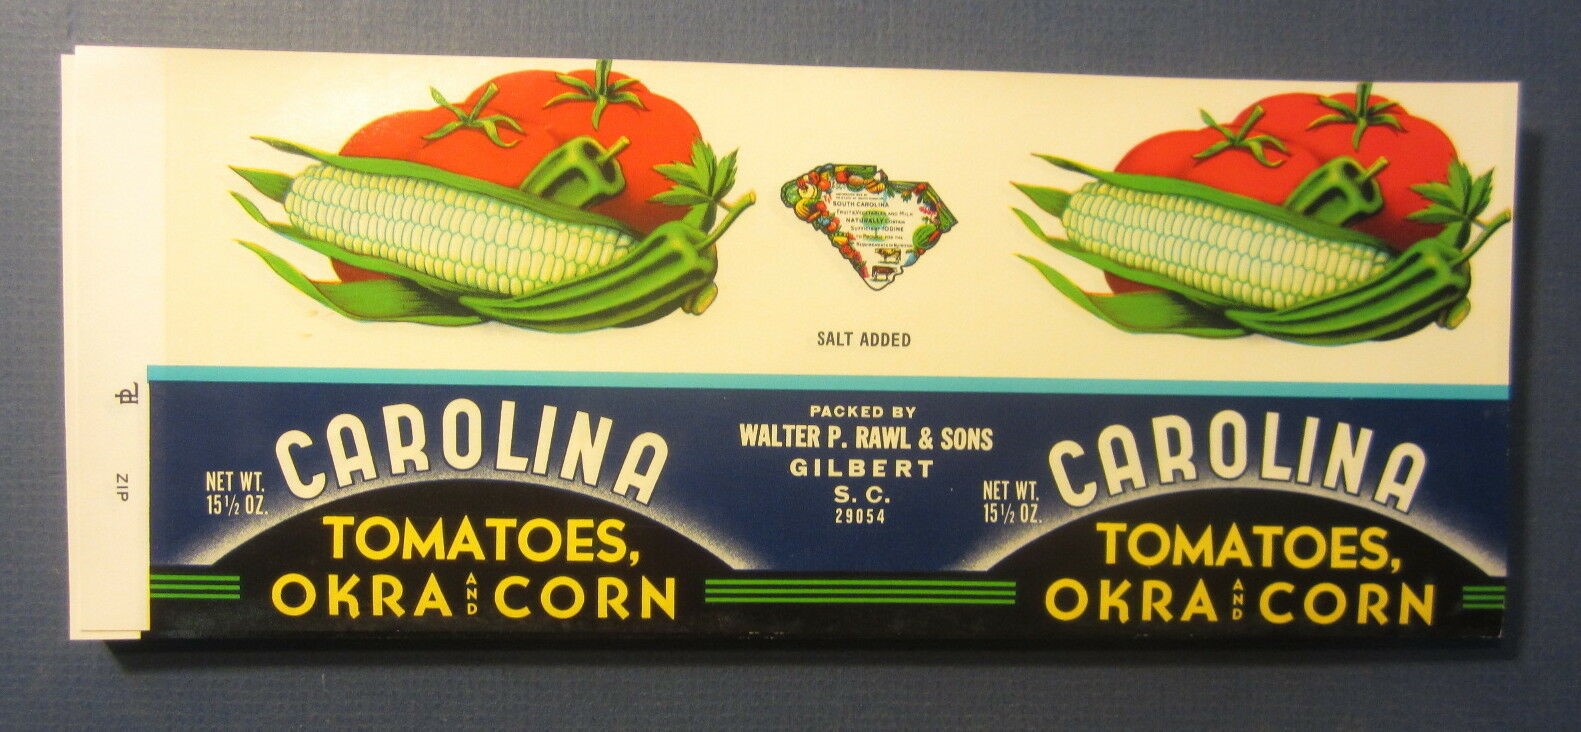  Lot of 100 Old CAROLINA Tomatoes Okra & Corn -...